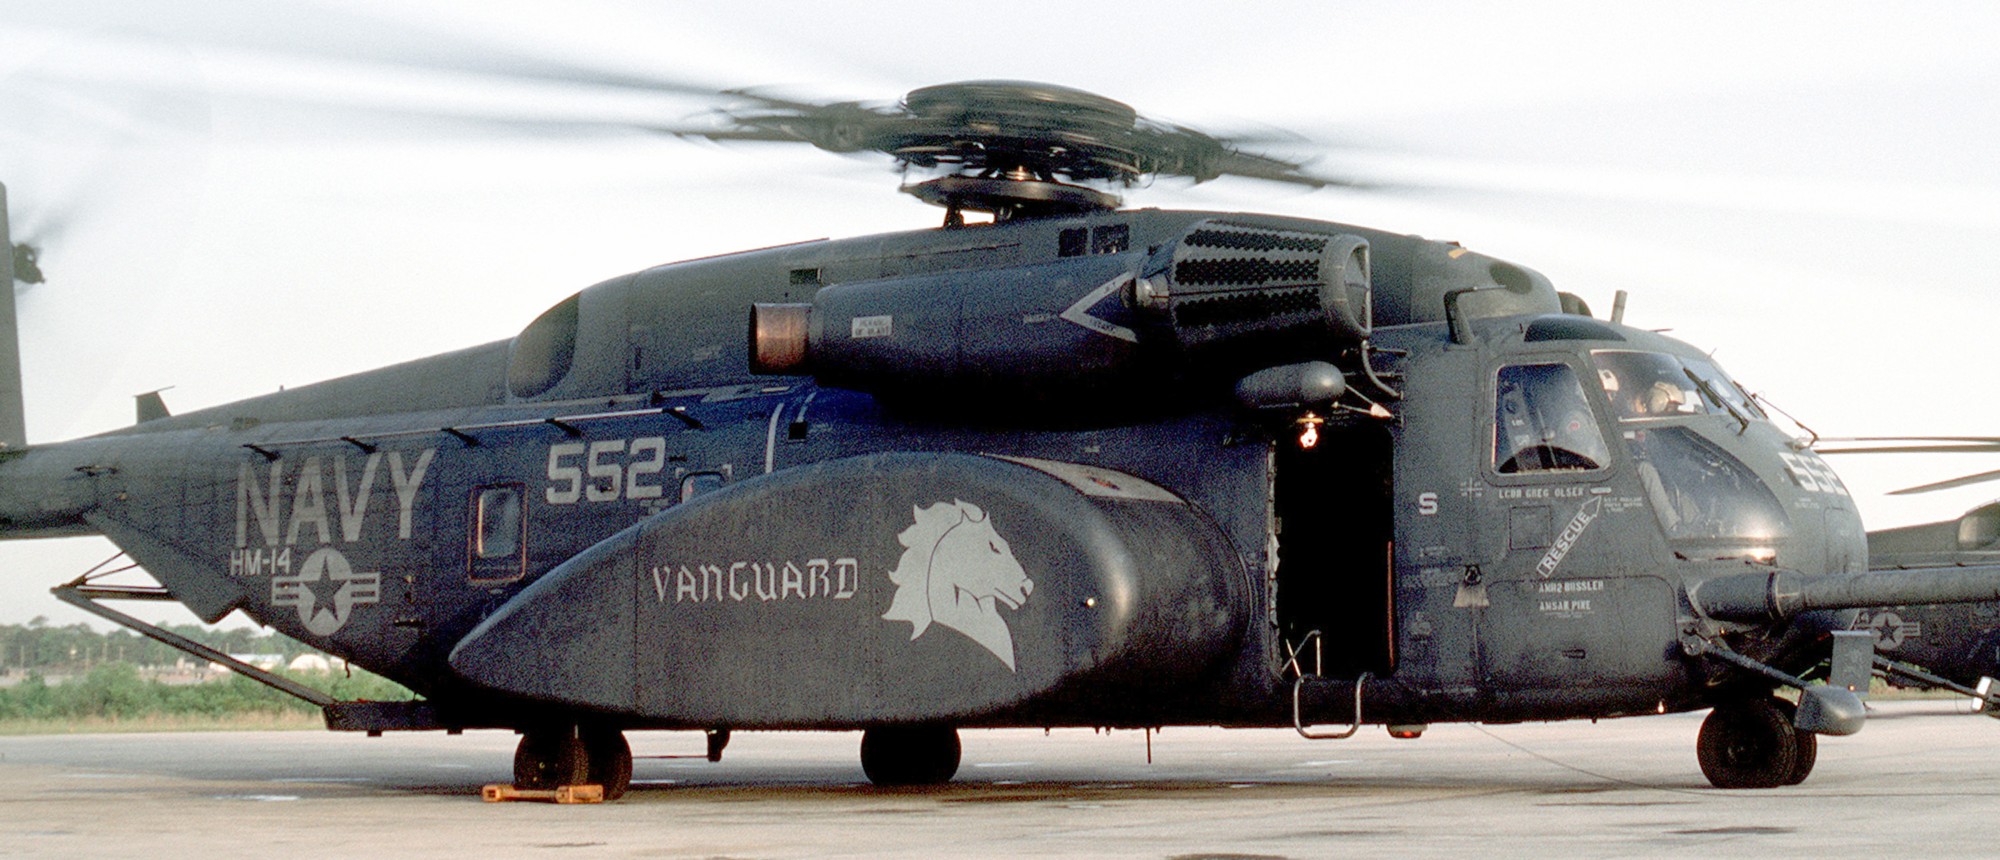 hm-14 vanguard helicopter mine countermeasures squadron navy mh-53e sea dragon 59